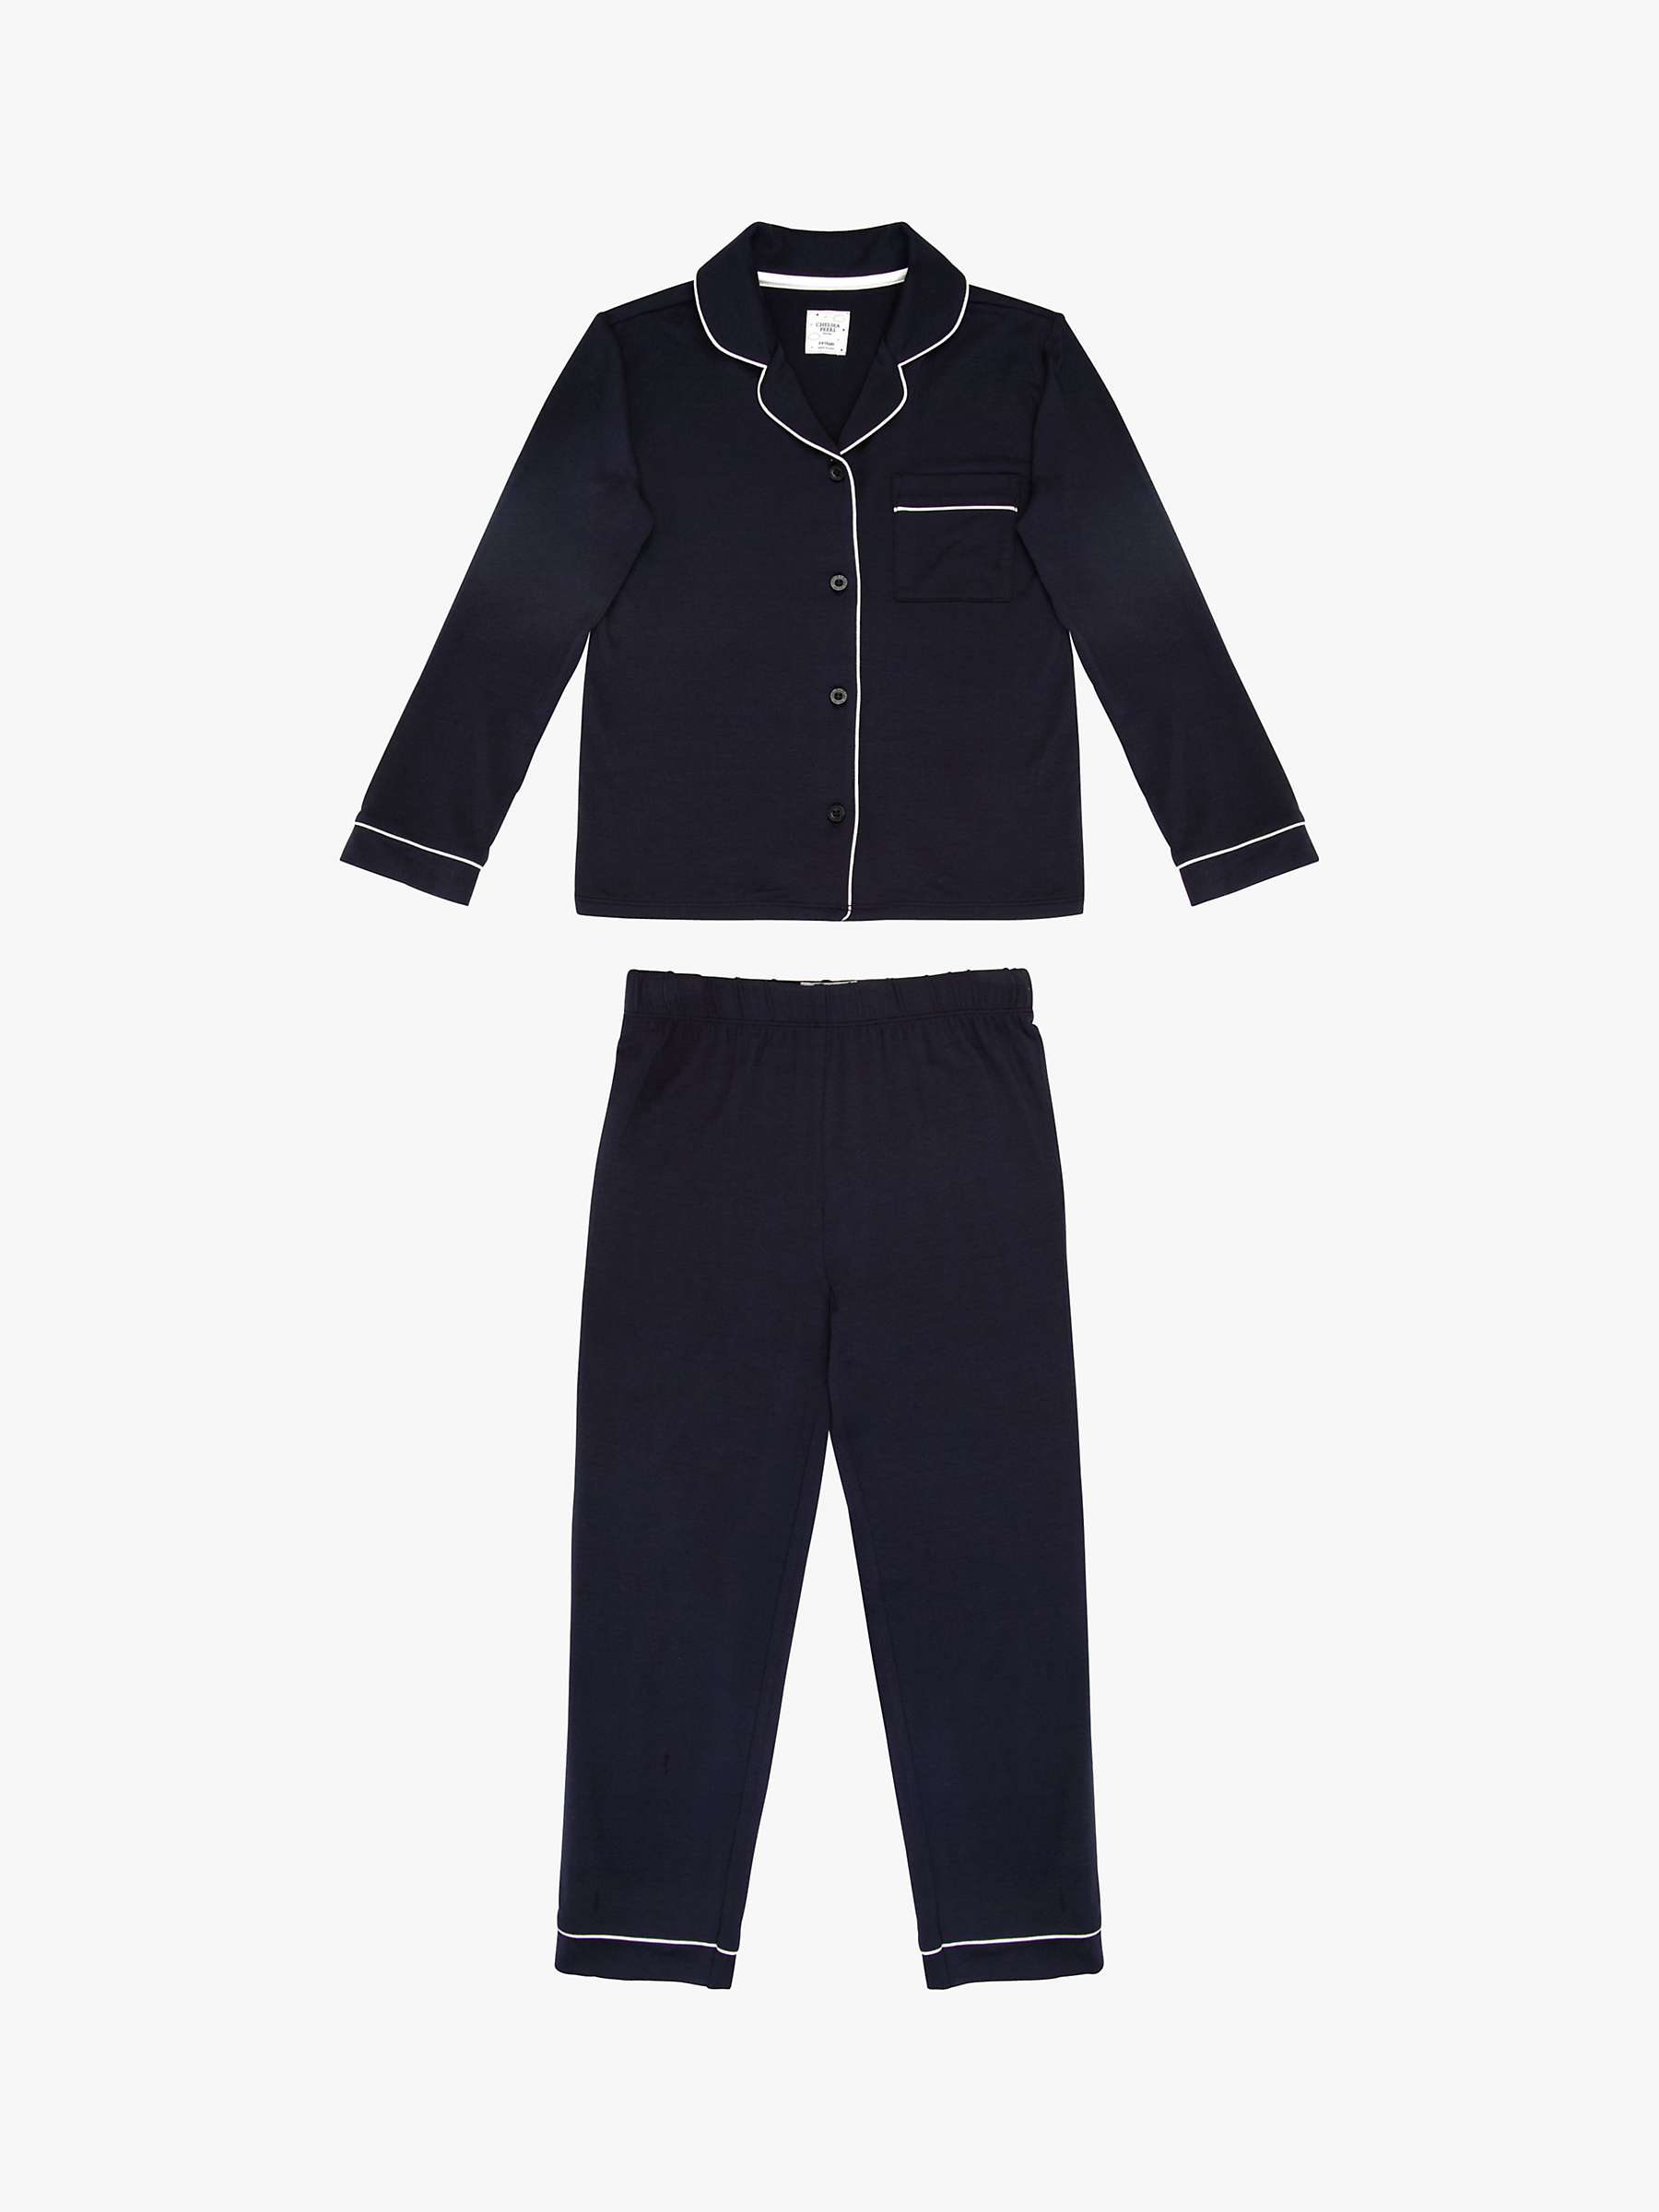 Buy Chelsea Peers Kids' Modal Button Up Pyjama Set Online at johnlewis.com